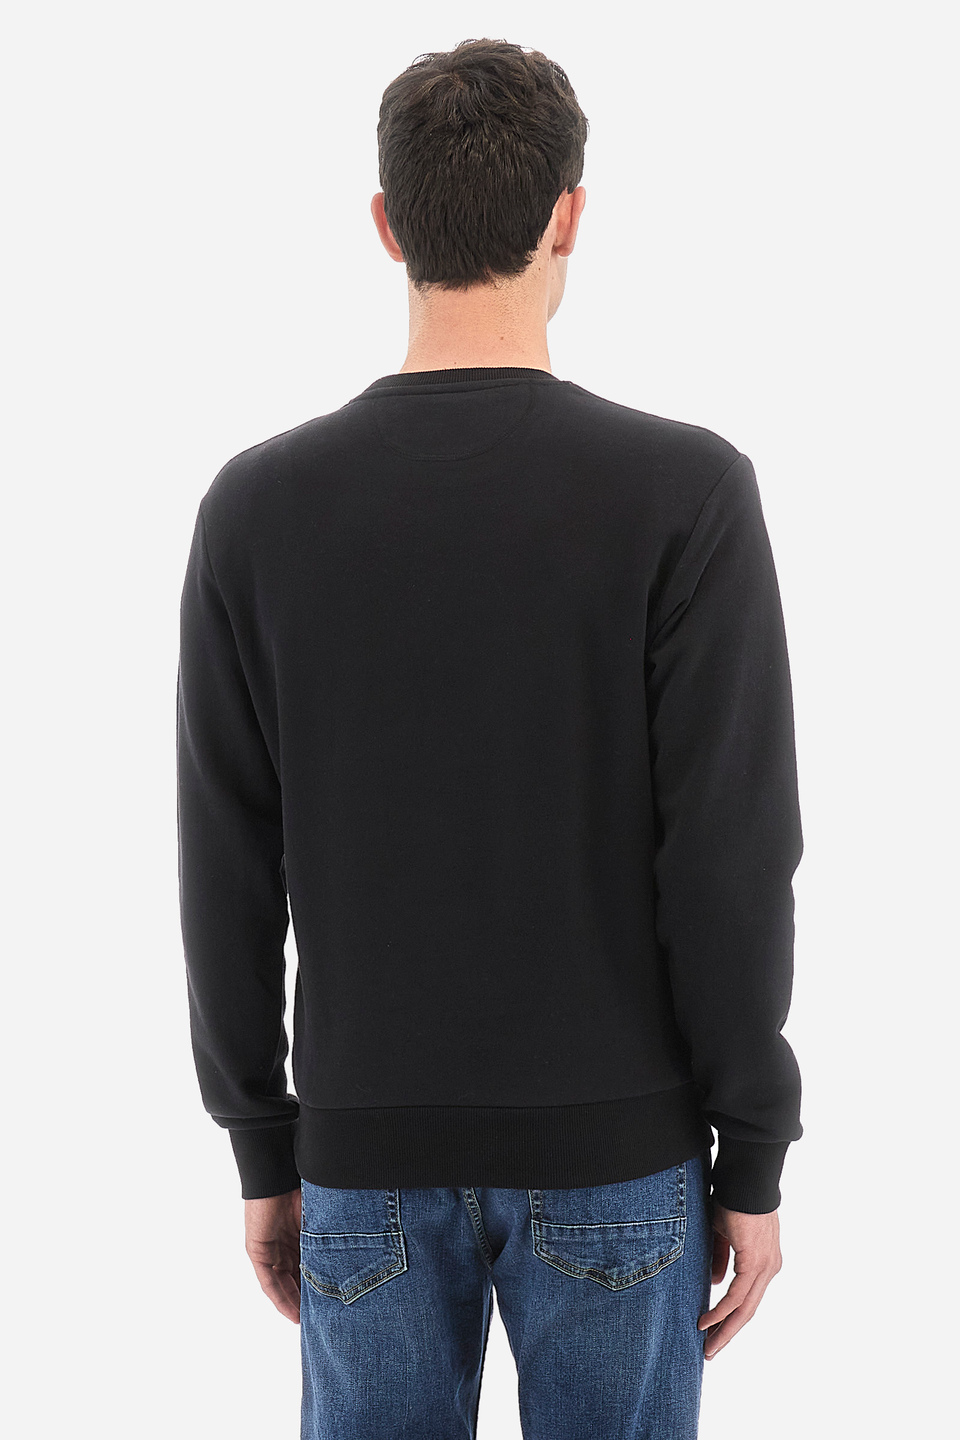 Men's crew-neck sweatshirt in a regular fit - Domingo | La Martina - Official Online Shop